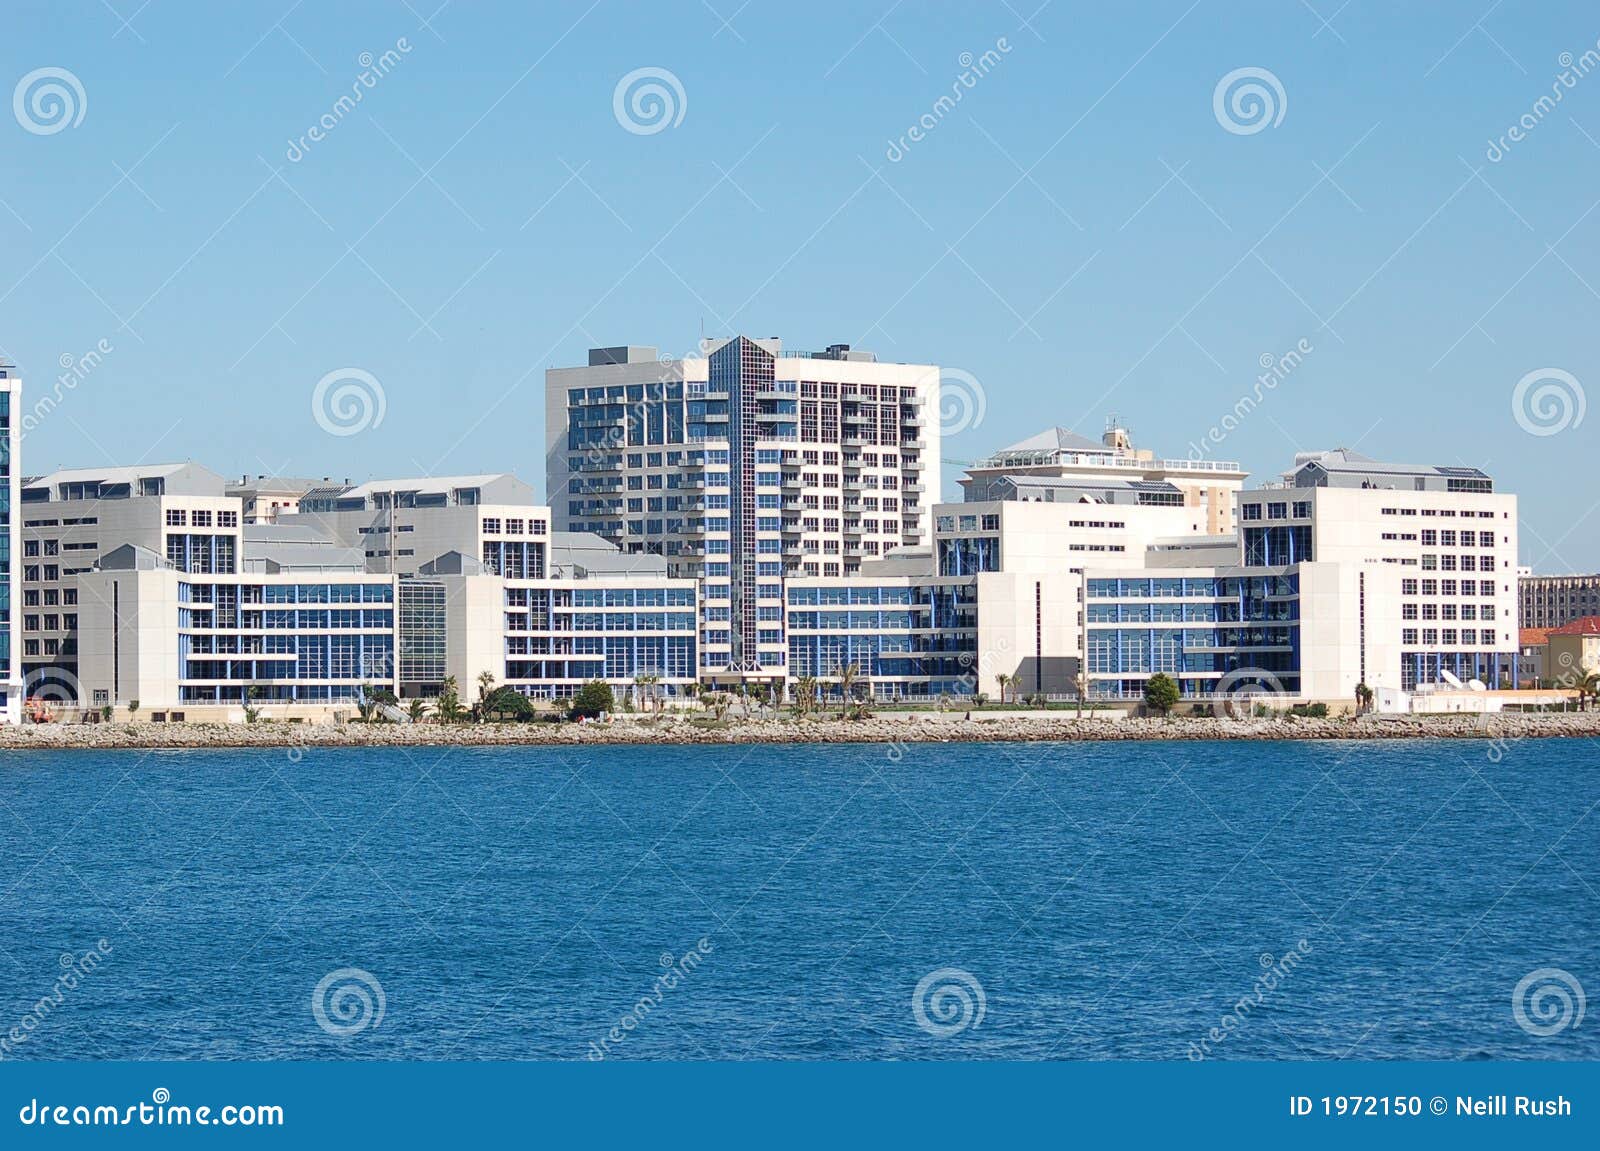 gibraltar hospital